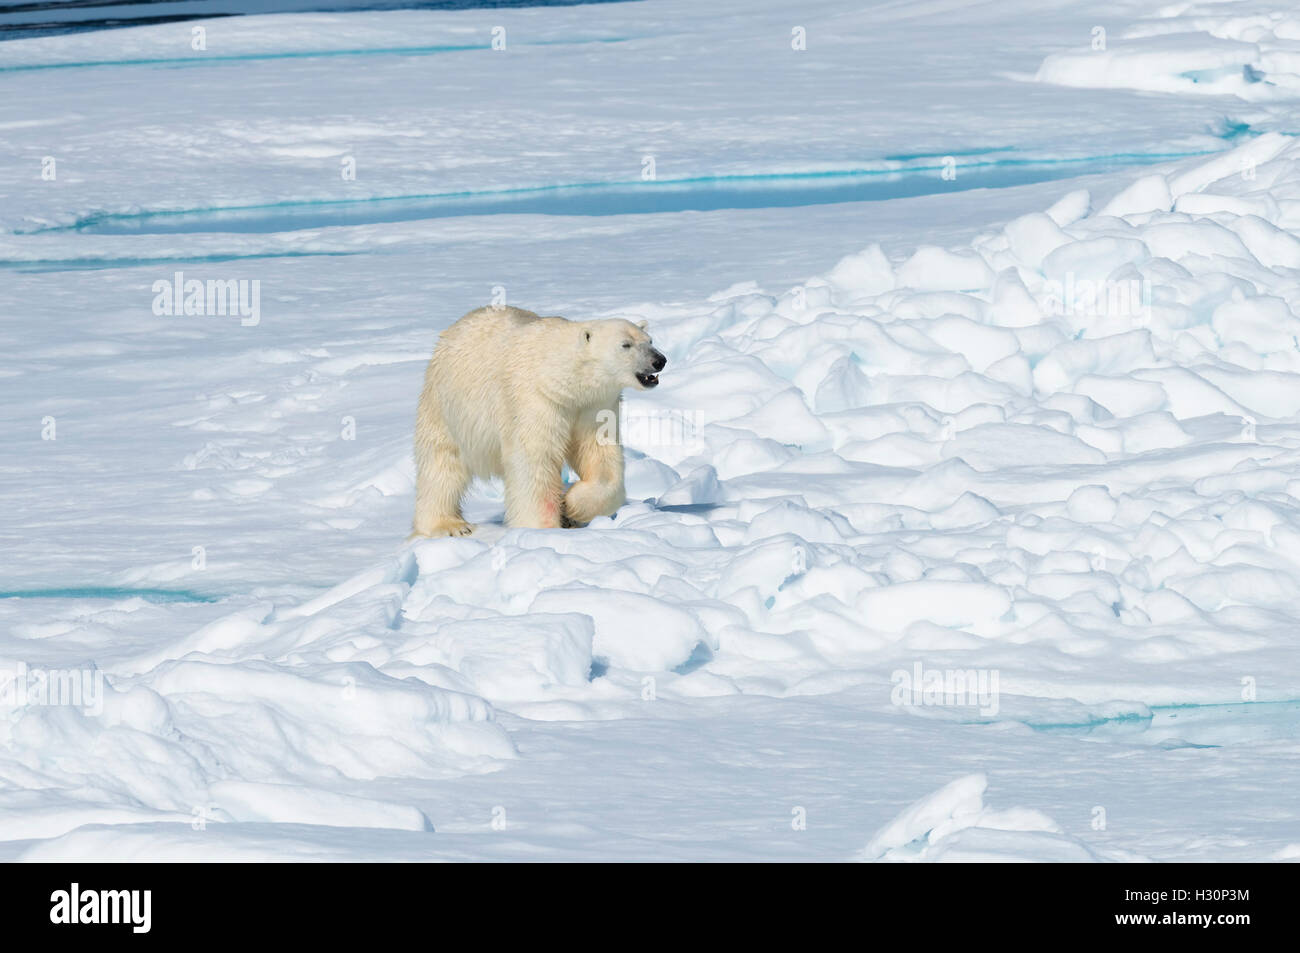 Male Polar Bear (Ursus maritimus) walking over pack ice, Spitsbergen Island, Svalbard archipelago, Norway, Europe Stock Photo